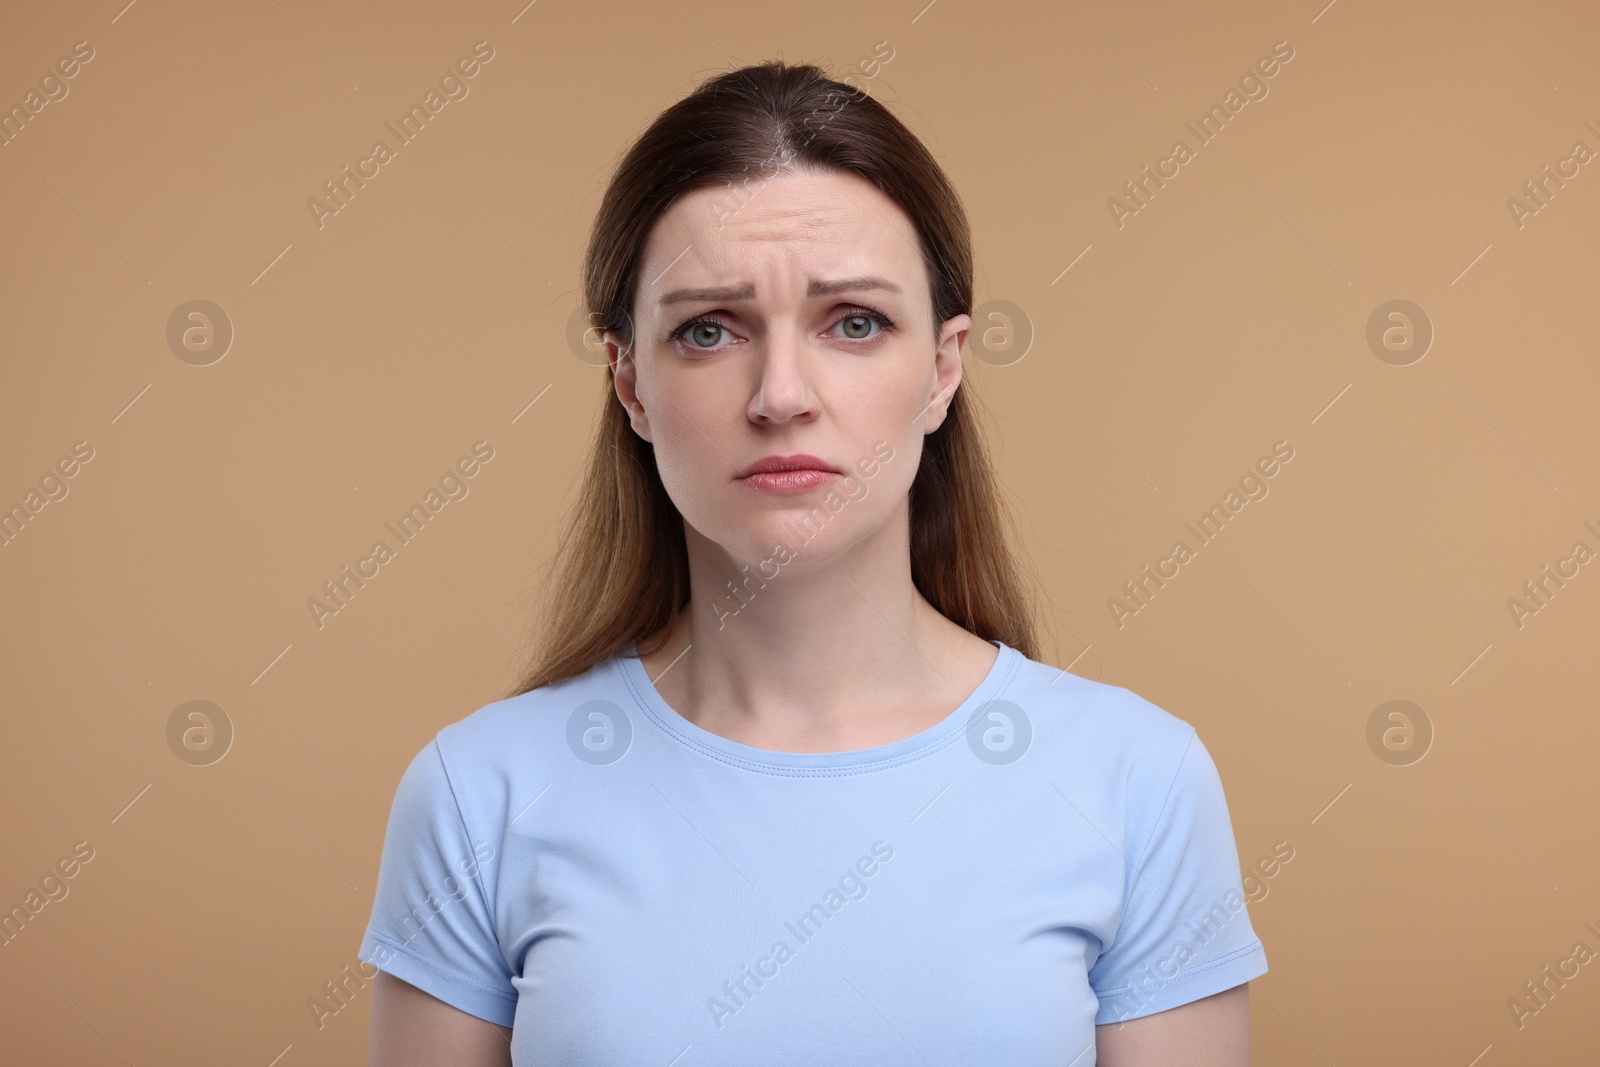 Photo of Portrait of sad woman on beige background